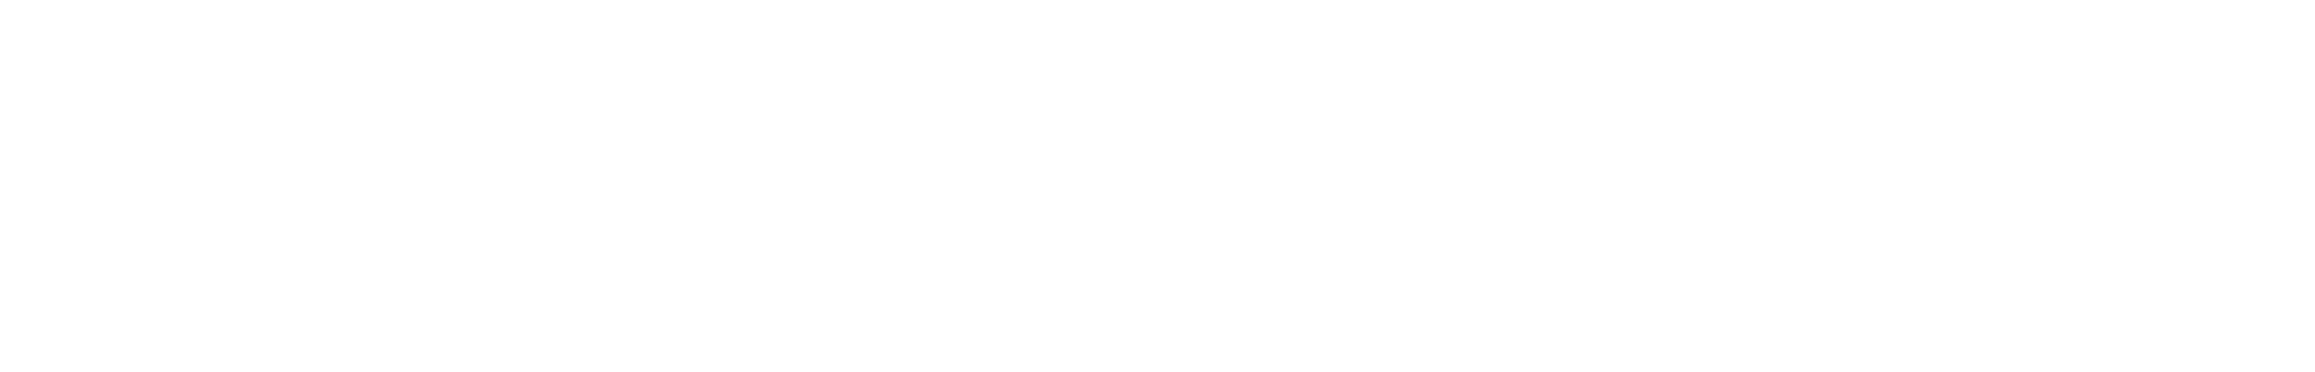 Emory University Staff Council Logo